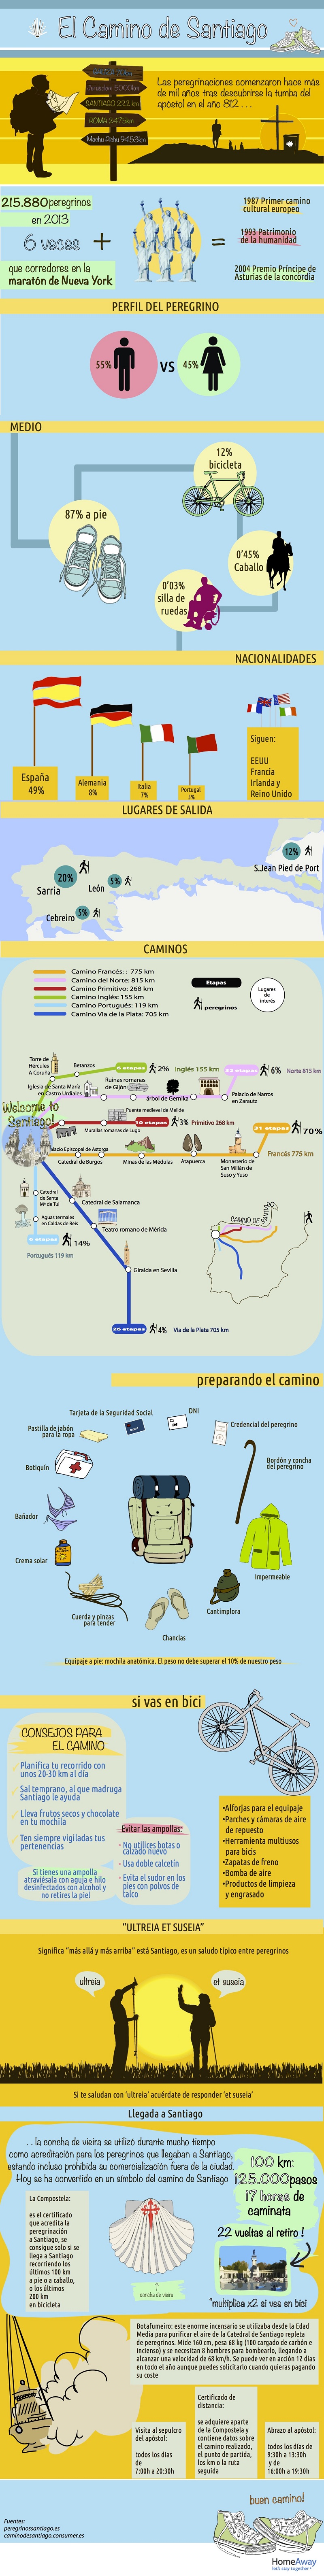 Datos Curiosos Camino de Santiago